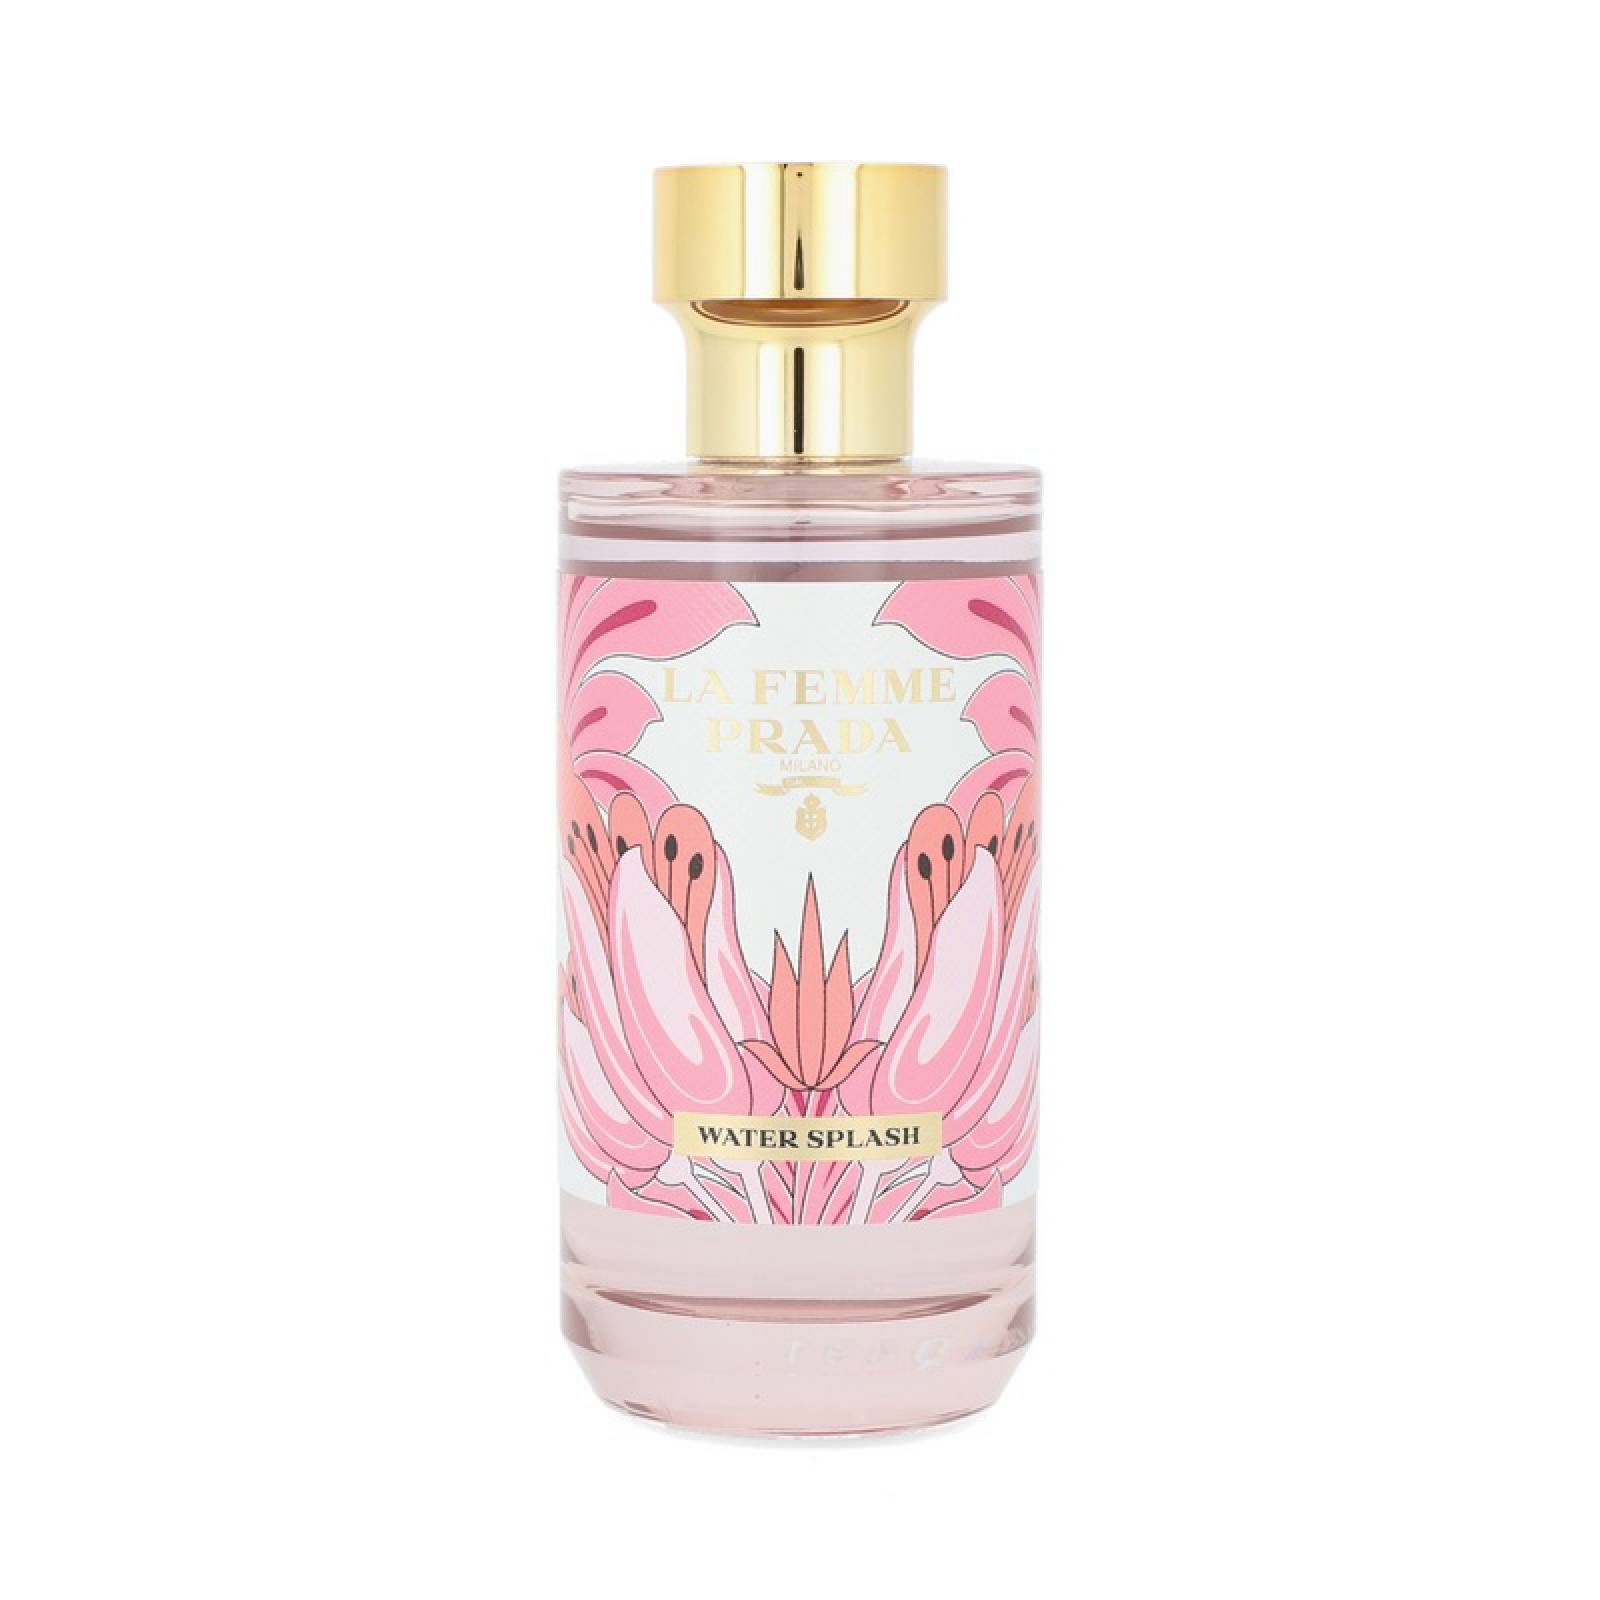 Perfume Dama Prada La Femme Water Splash 150 ml Edt Spray